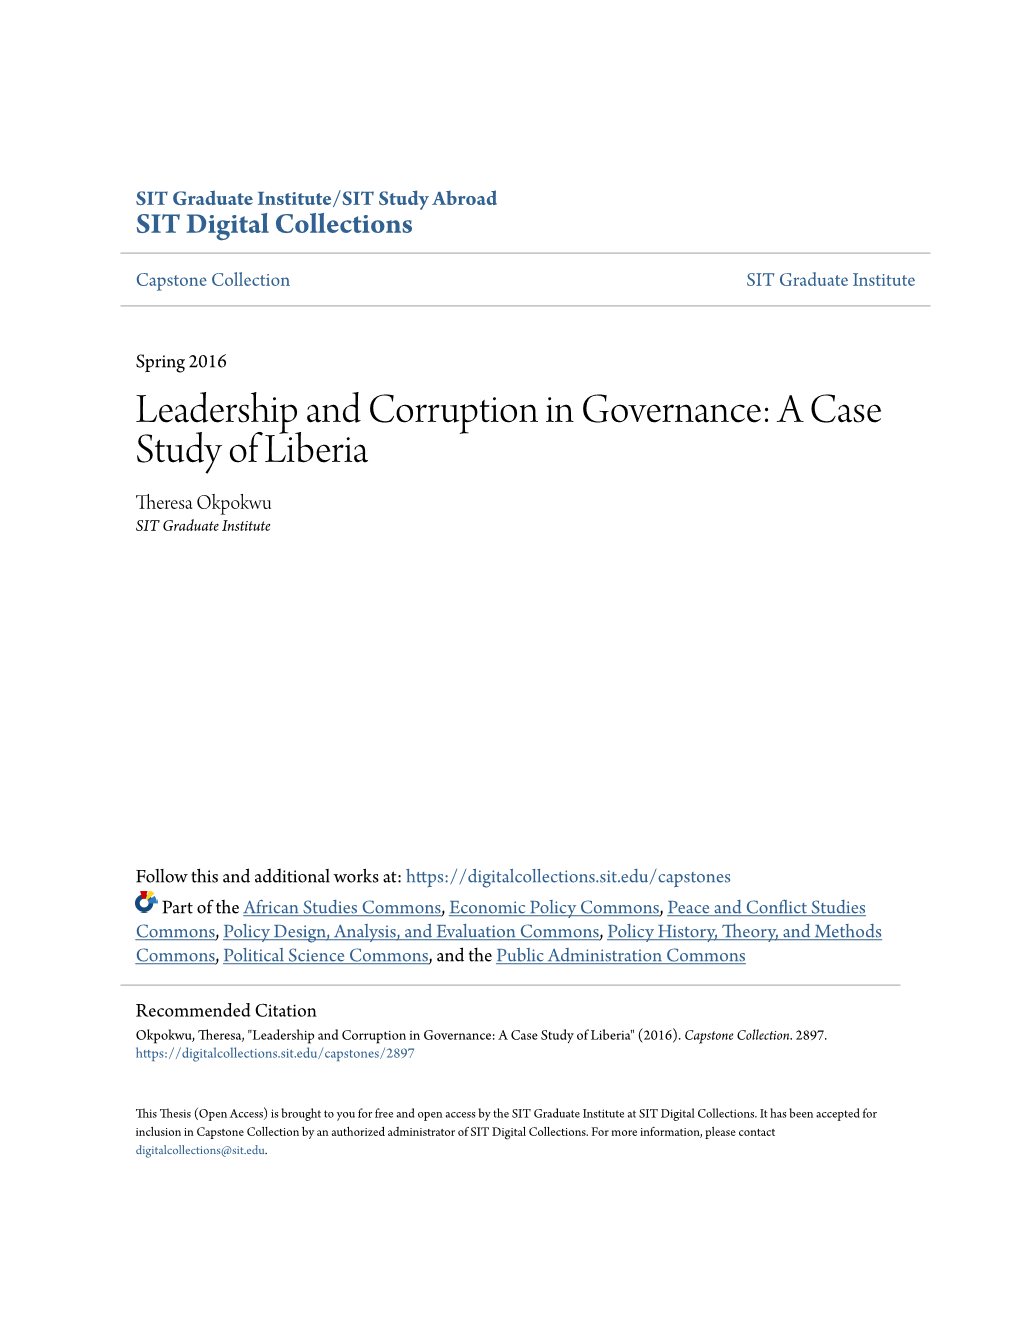 Leadership and Corruption in Governance: a Case Study of Liberia Theresa Okpokwu SIT Graduate Institute